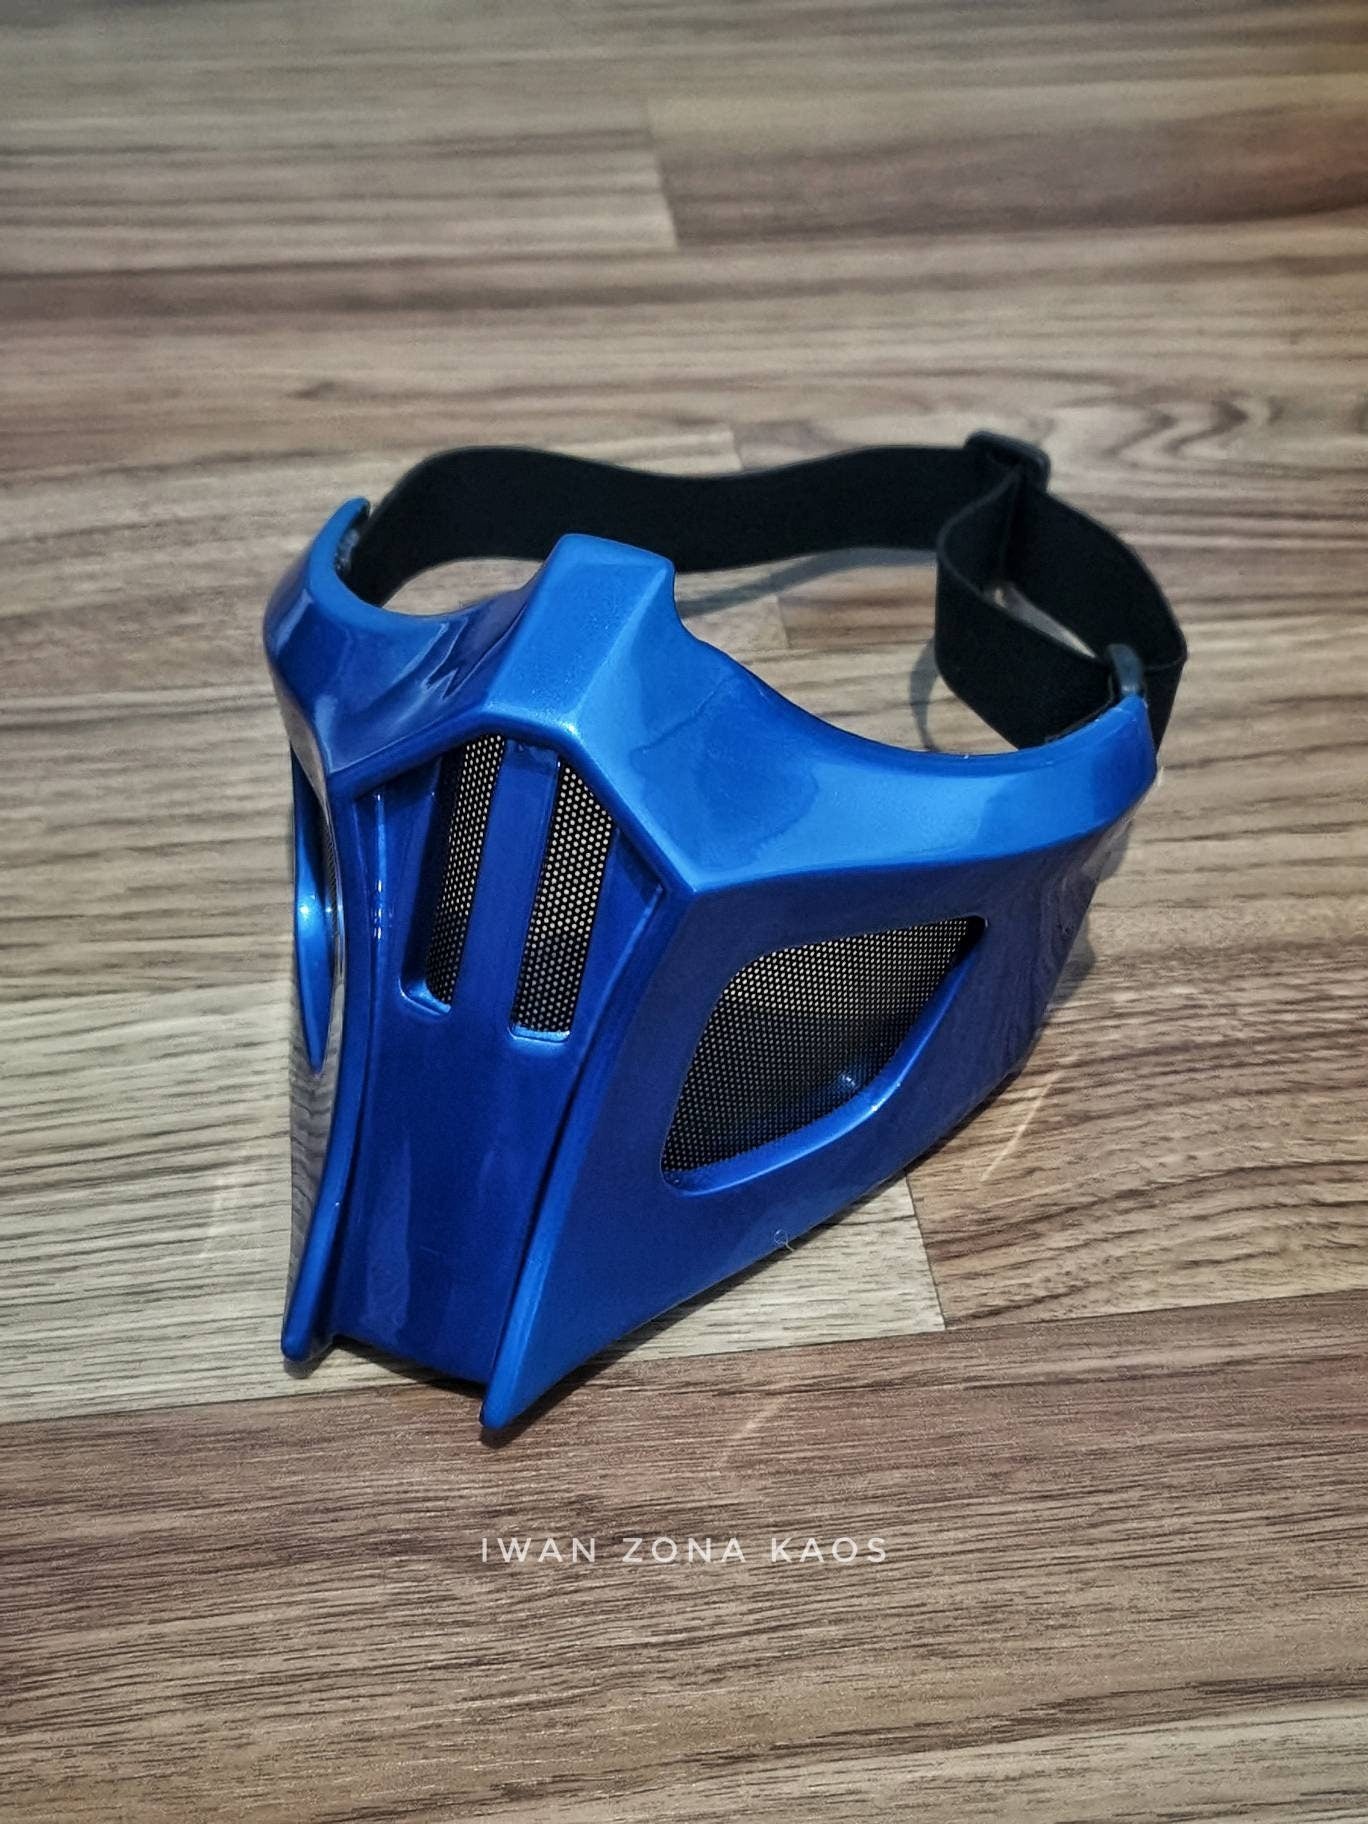 Mortal kombat sub zero noob saibot mask